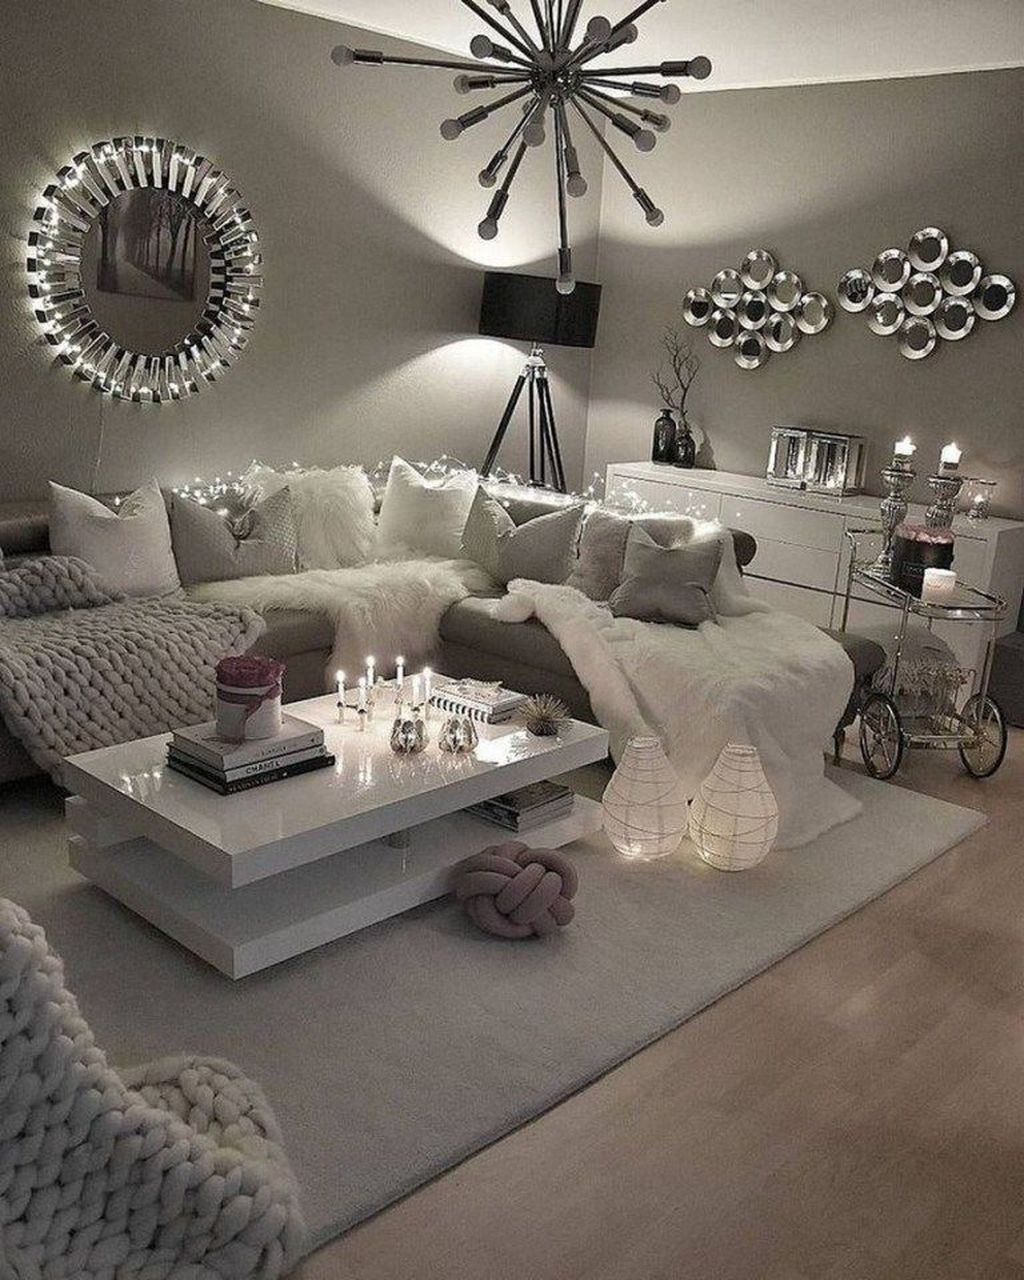 Impressive Apartment Living Room Decorating Ideas On A Budget31